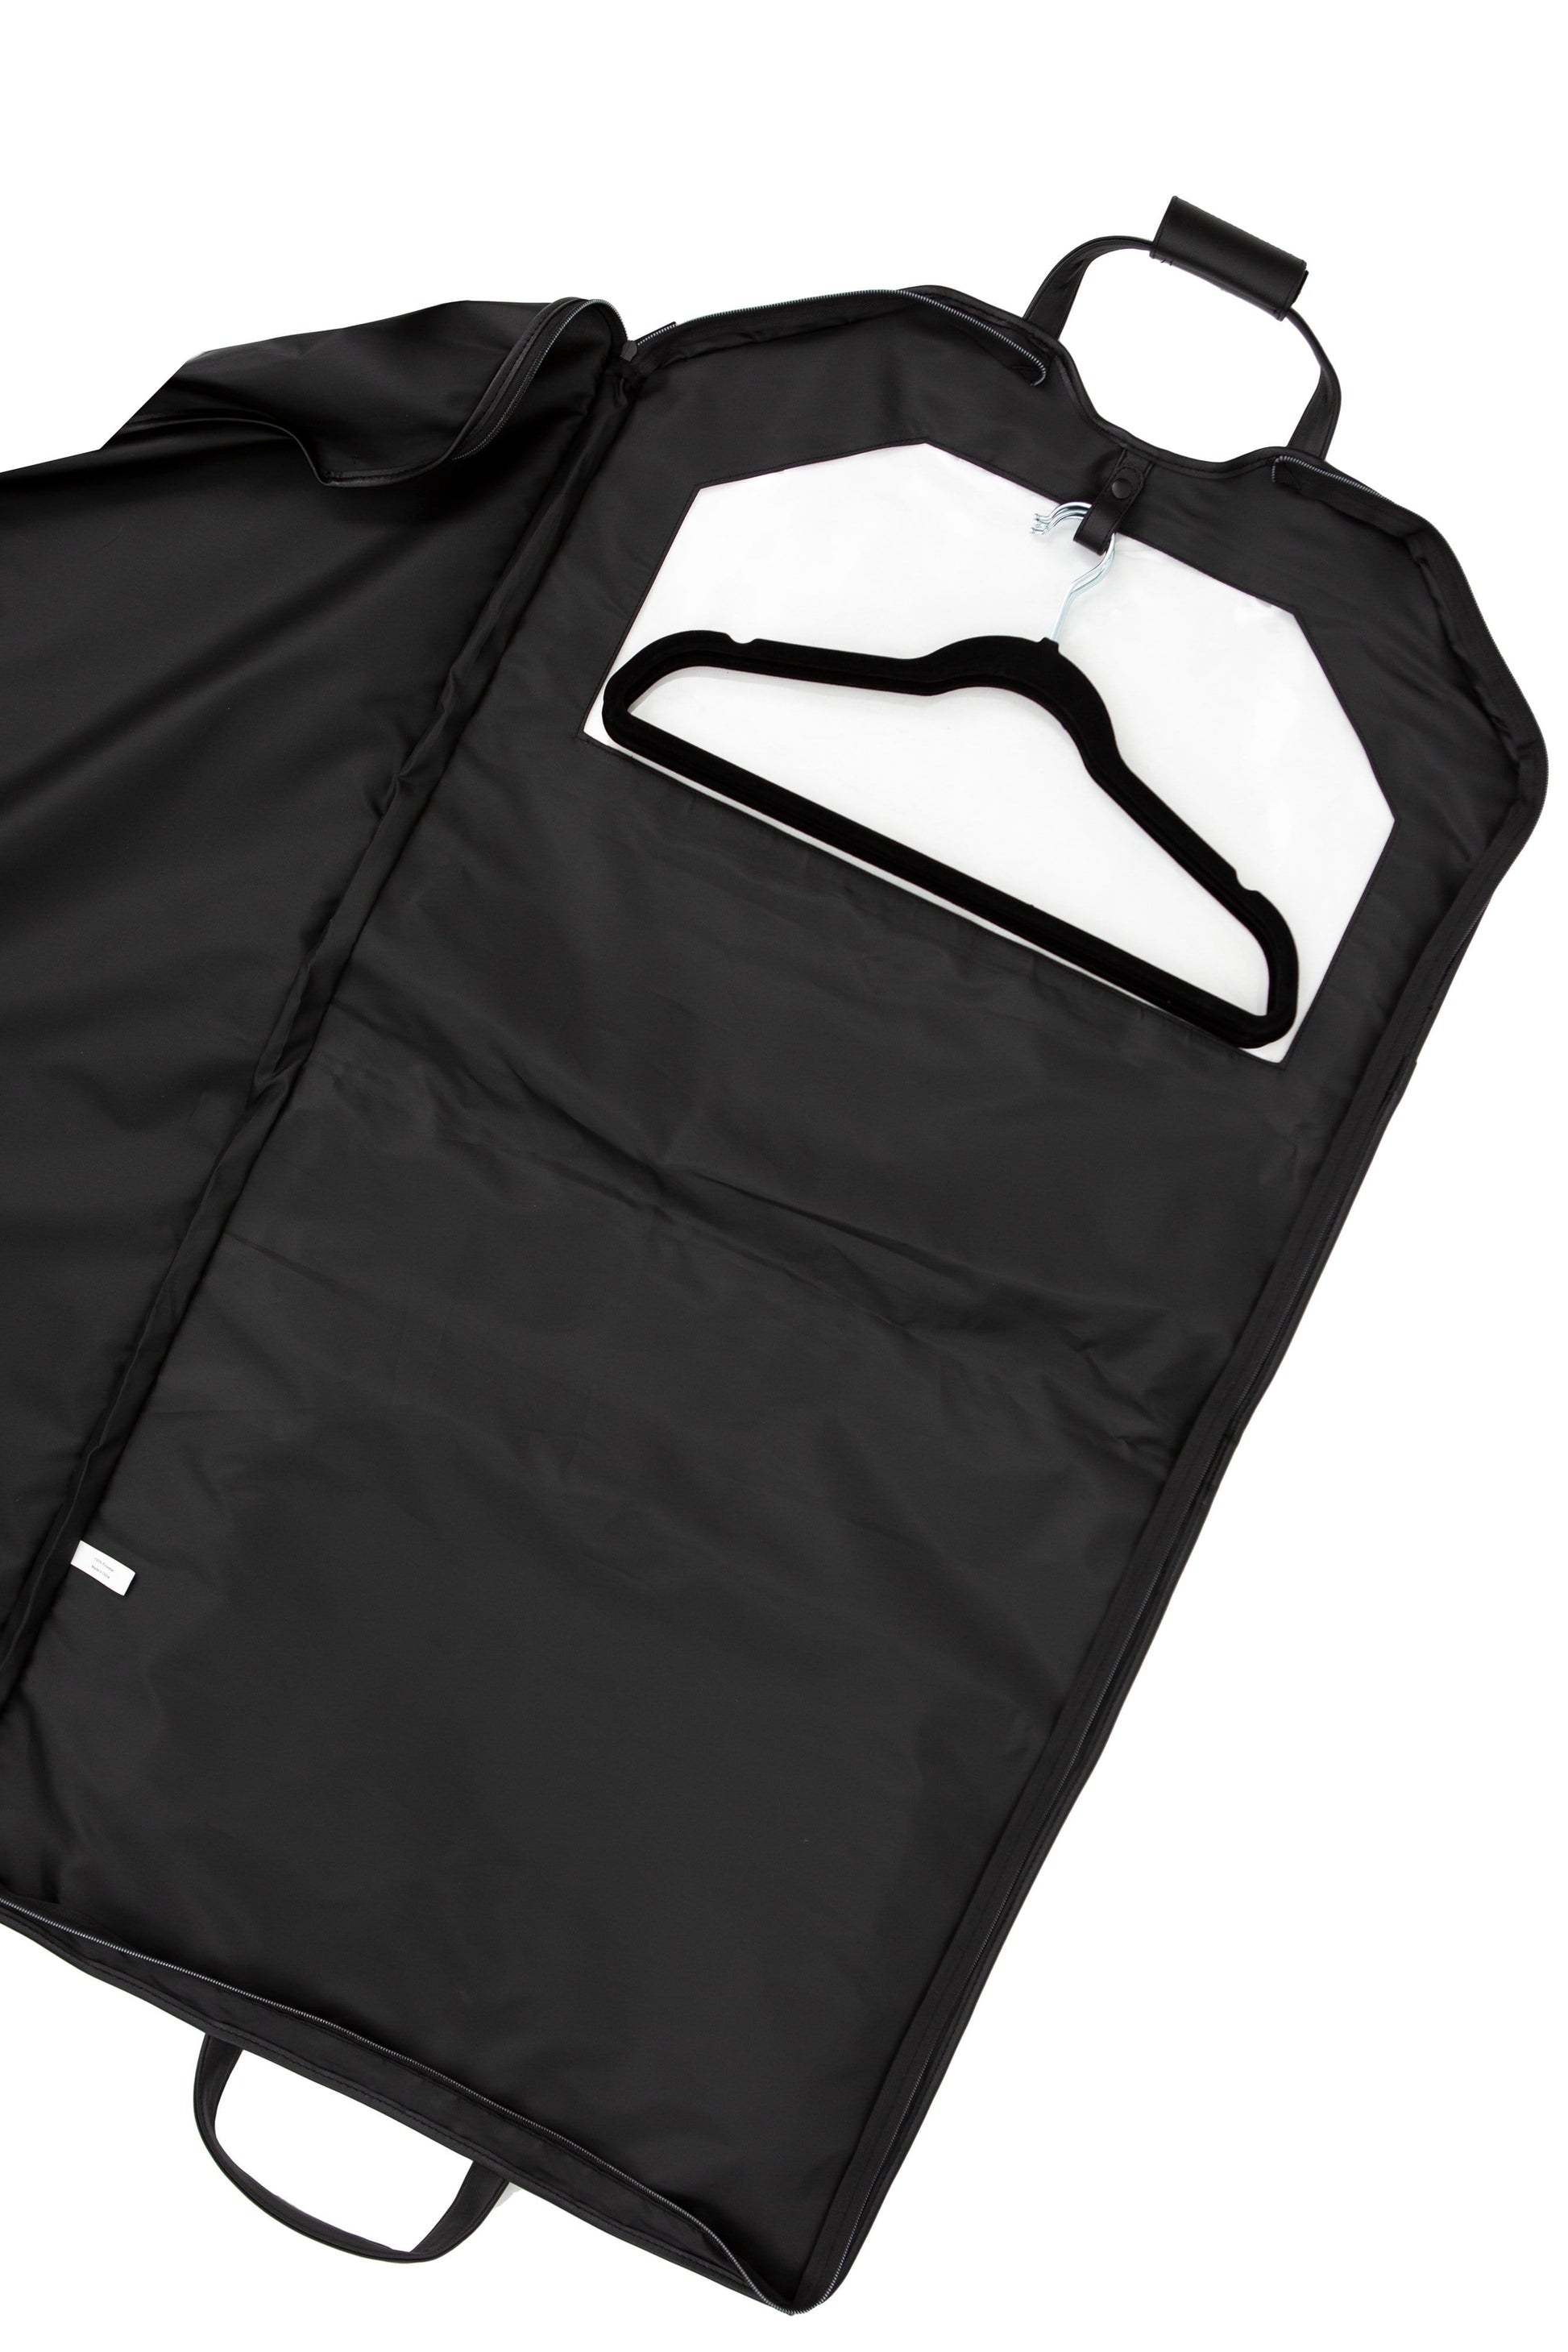 type A Ease Fabric Suit/Dress Storage Garment Bag